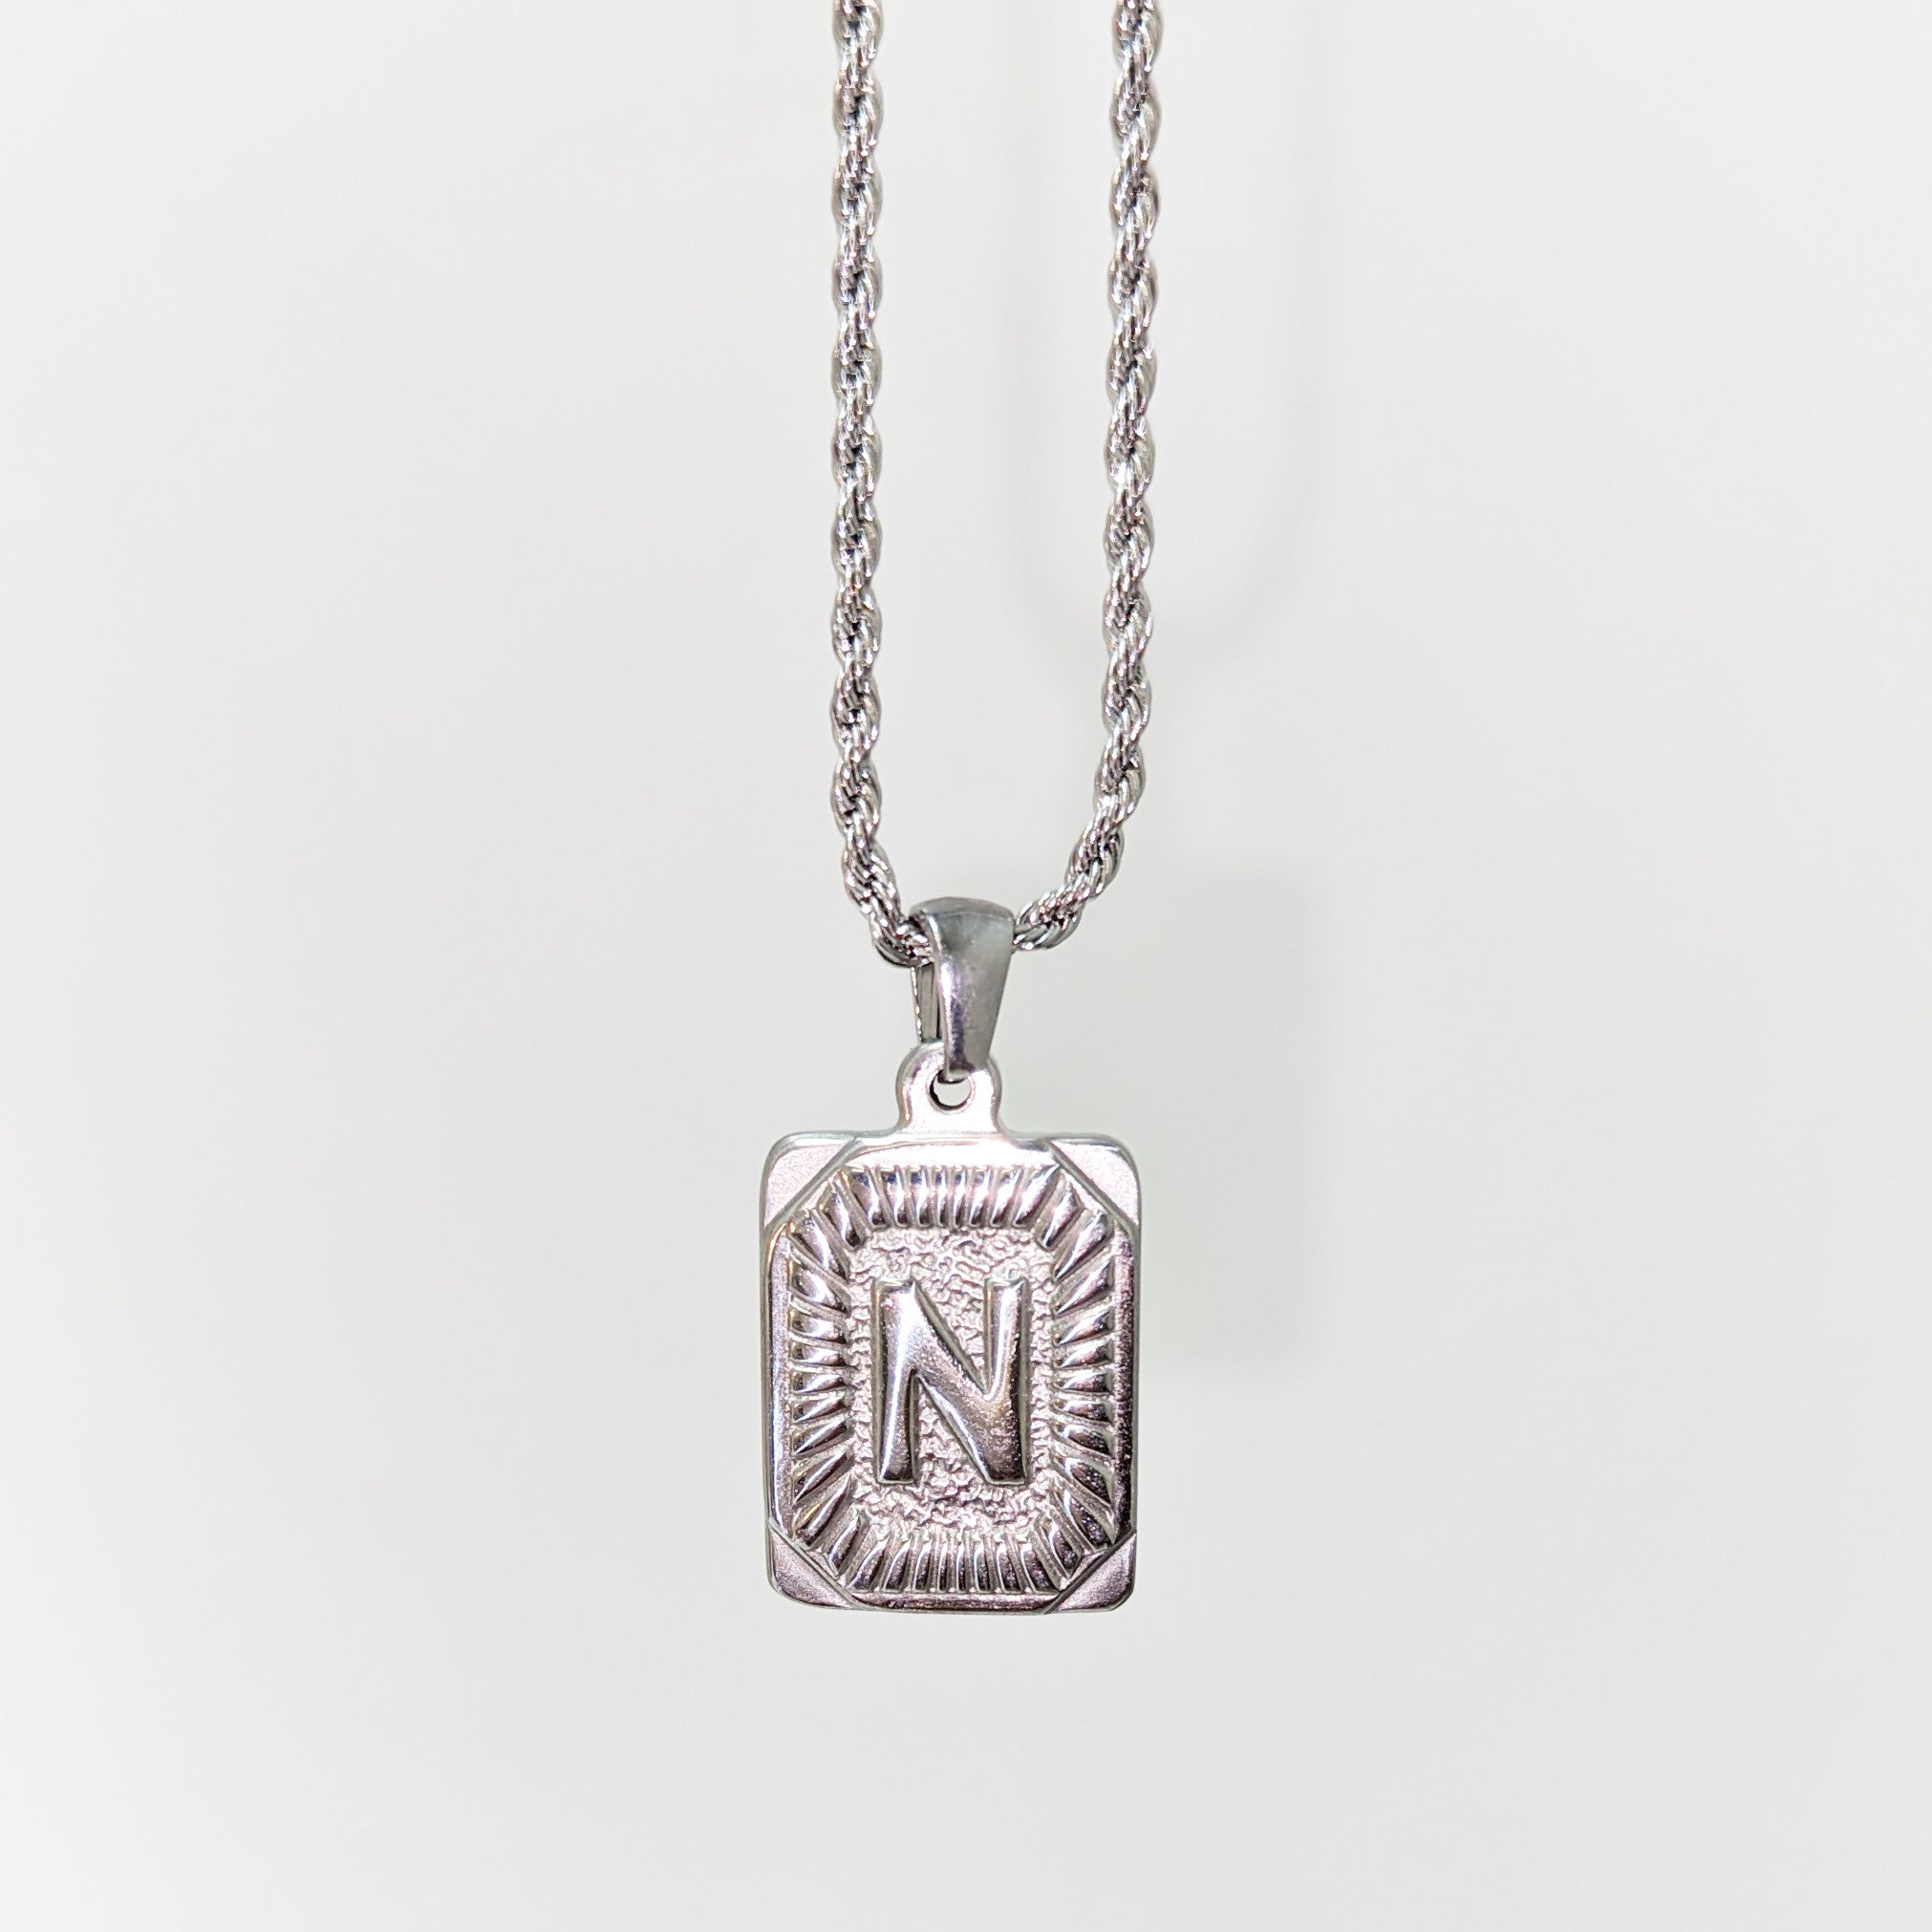 Genuine Diamond INITIAL Necklace - N Initial Diamond Pendant - Personalized  Jewelry Charm Choker